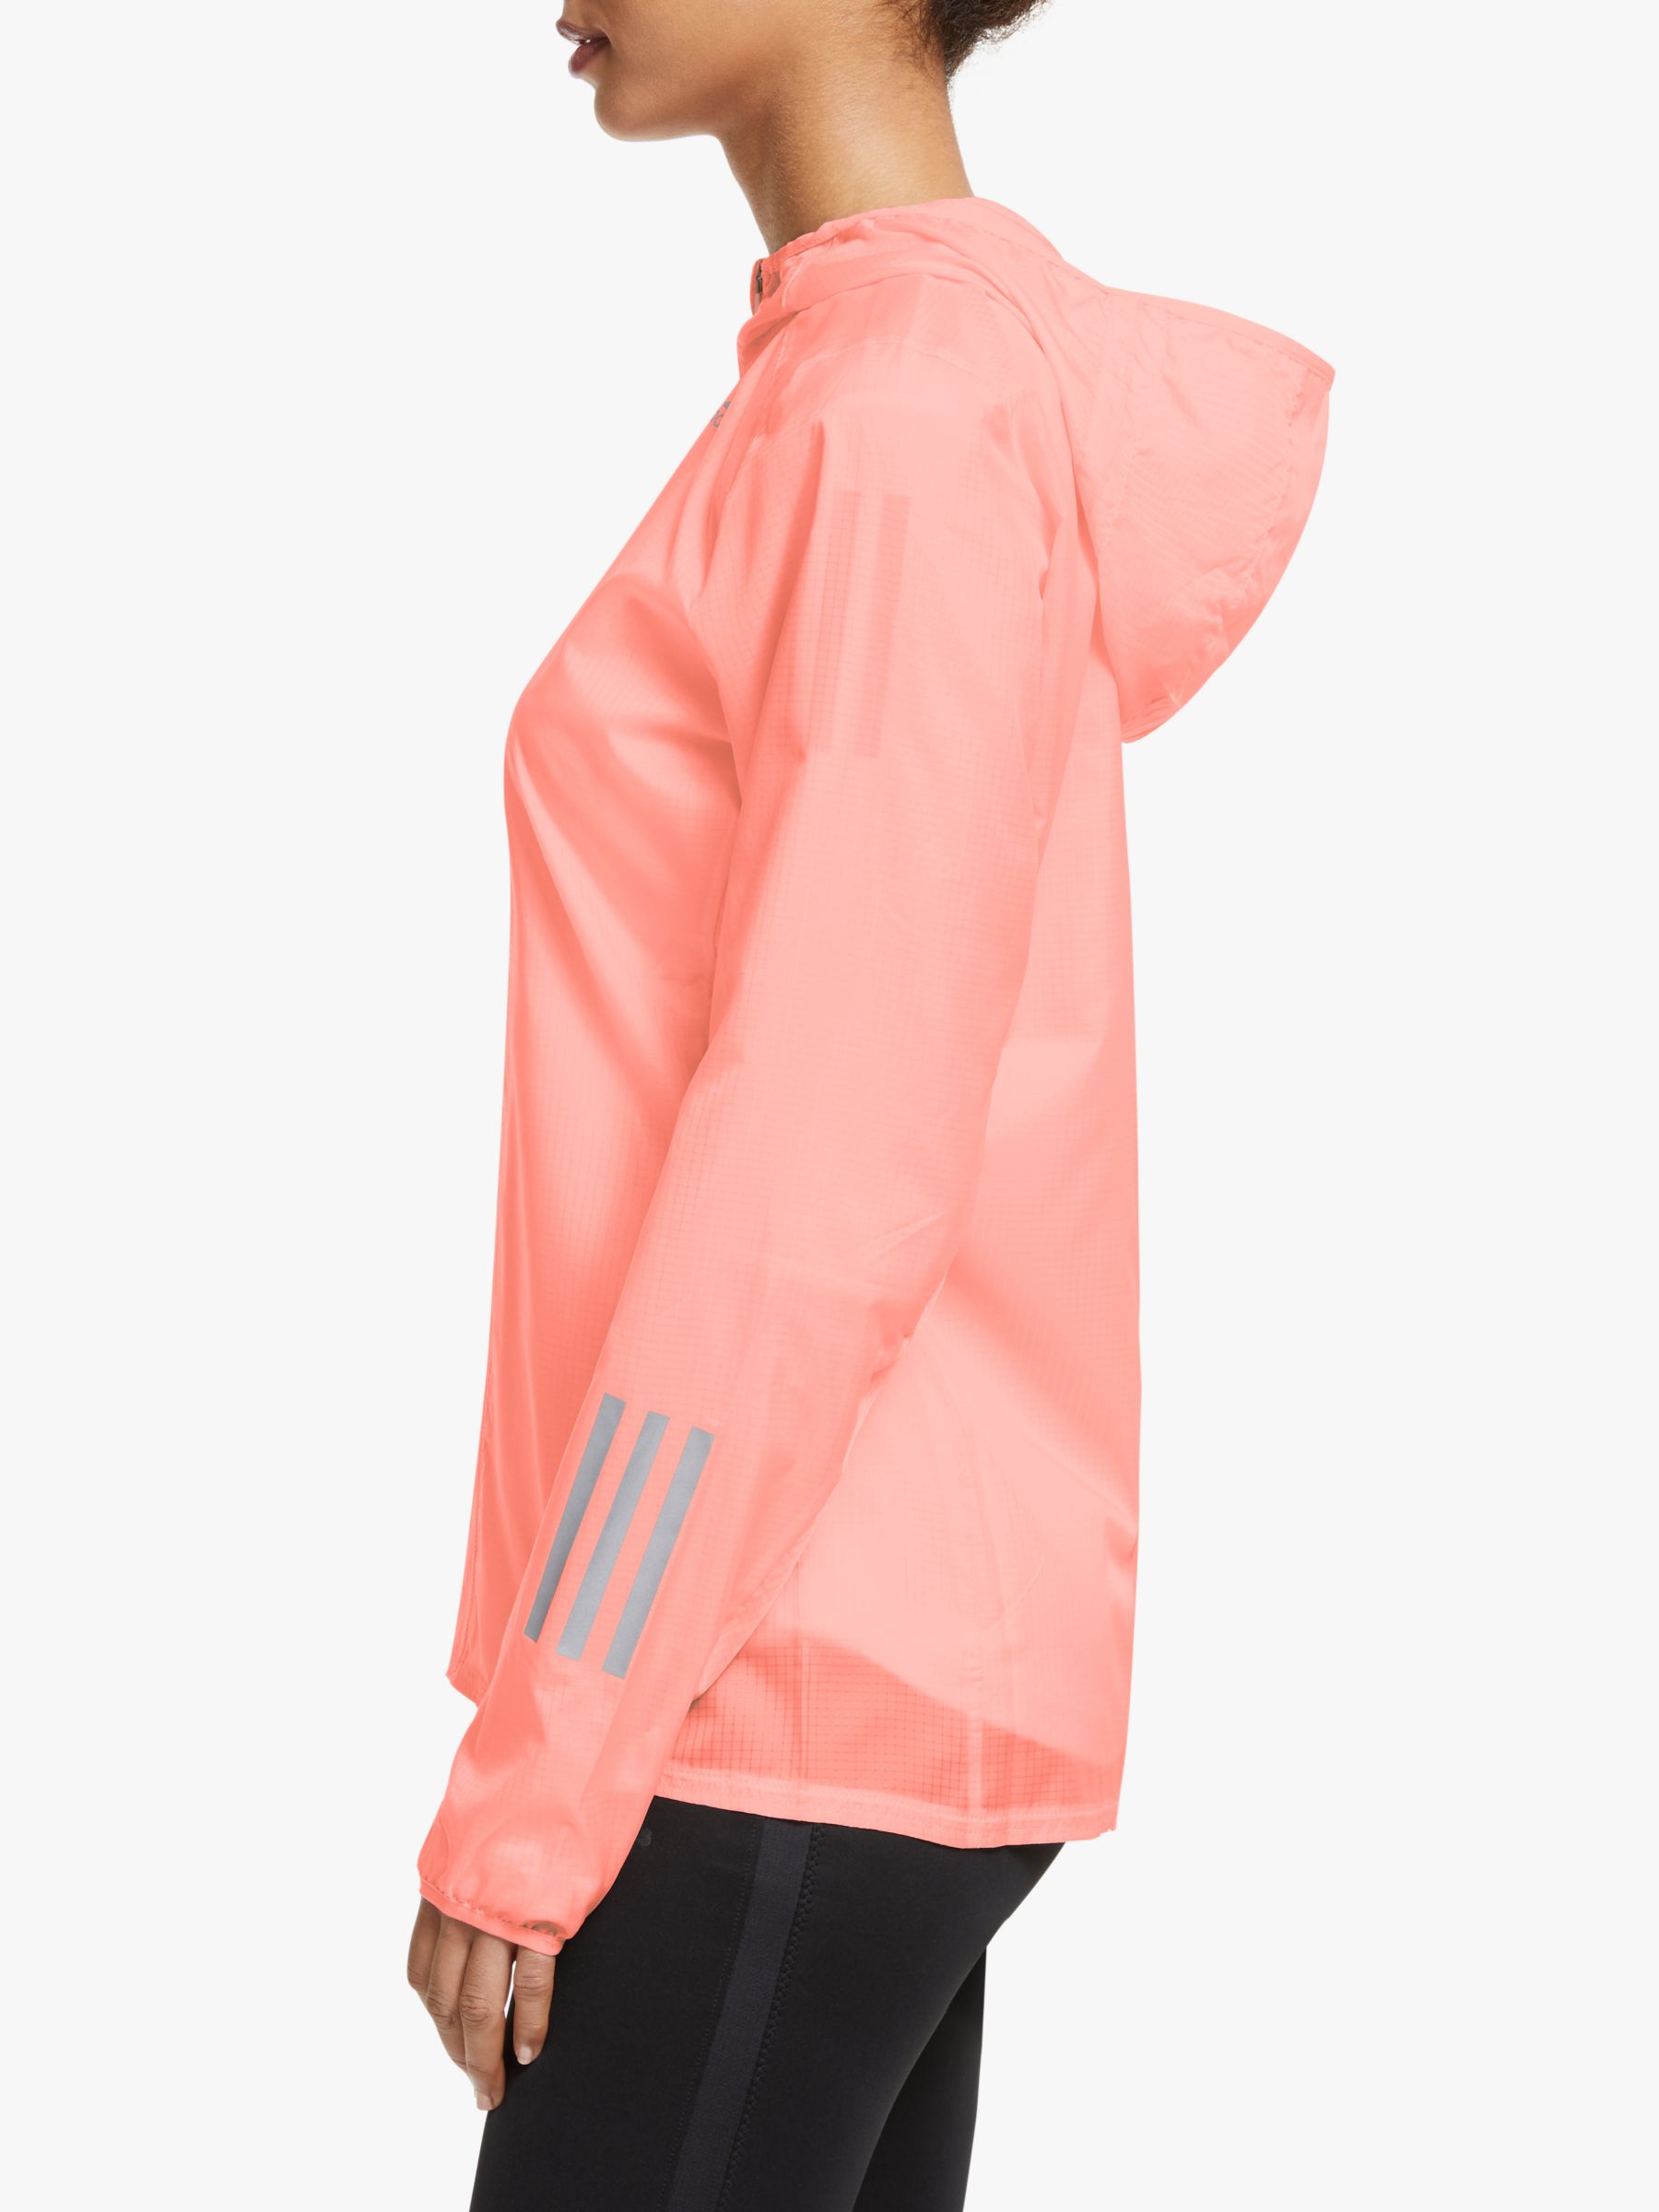 adidas women's response jacket